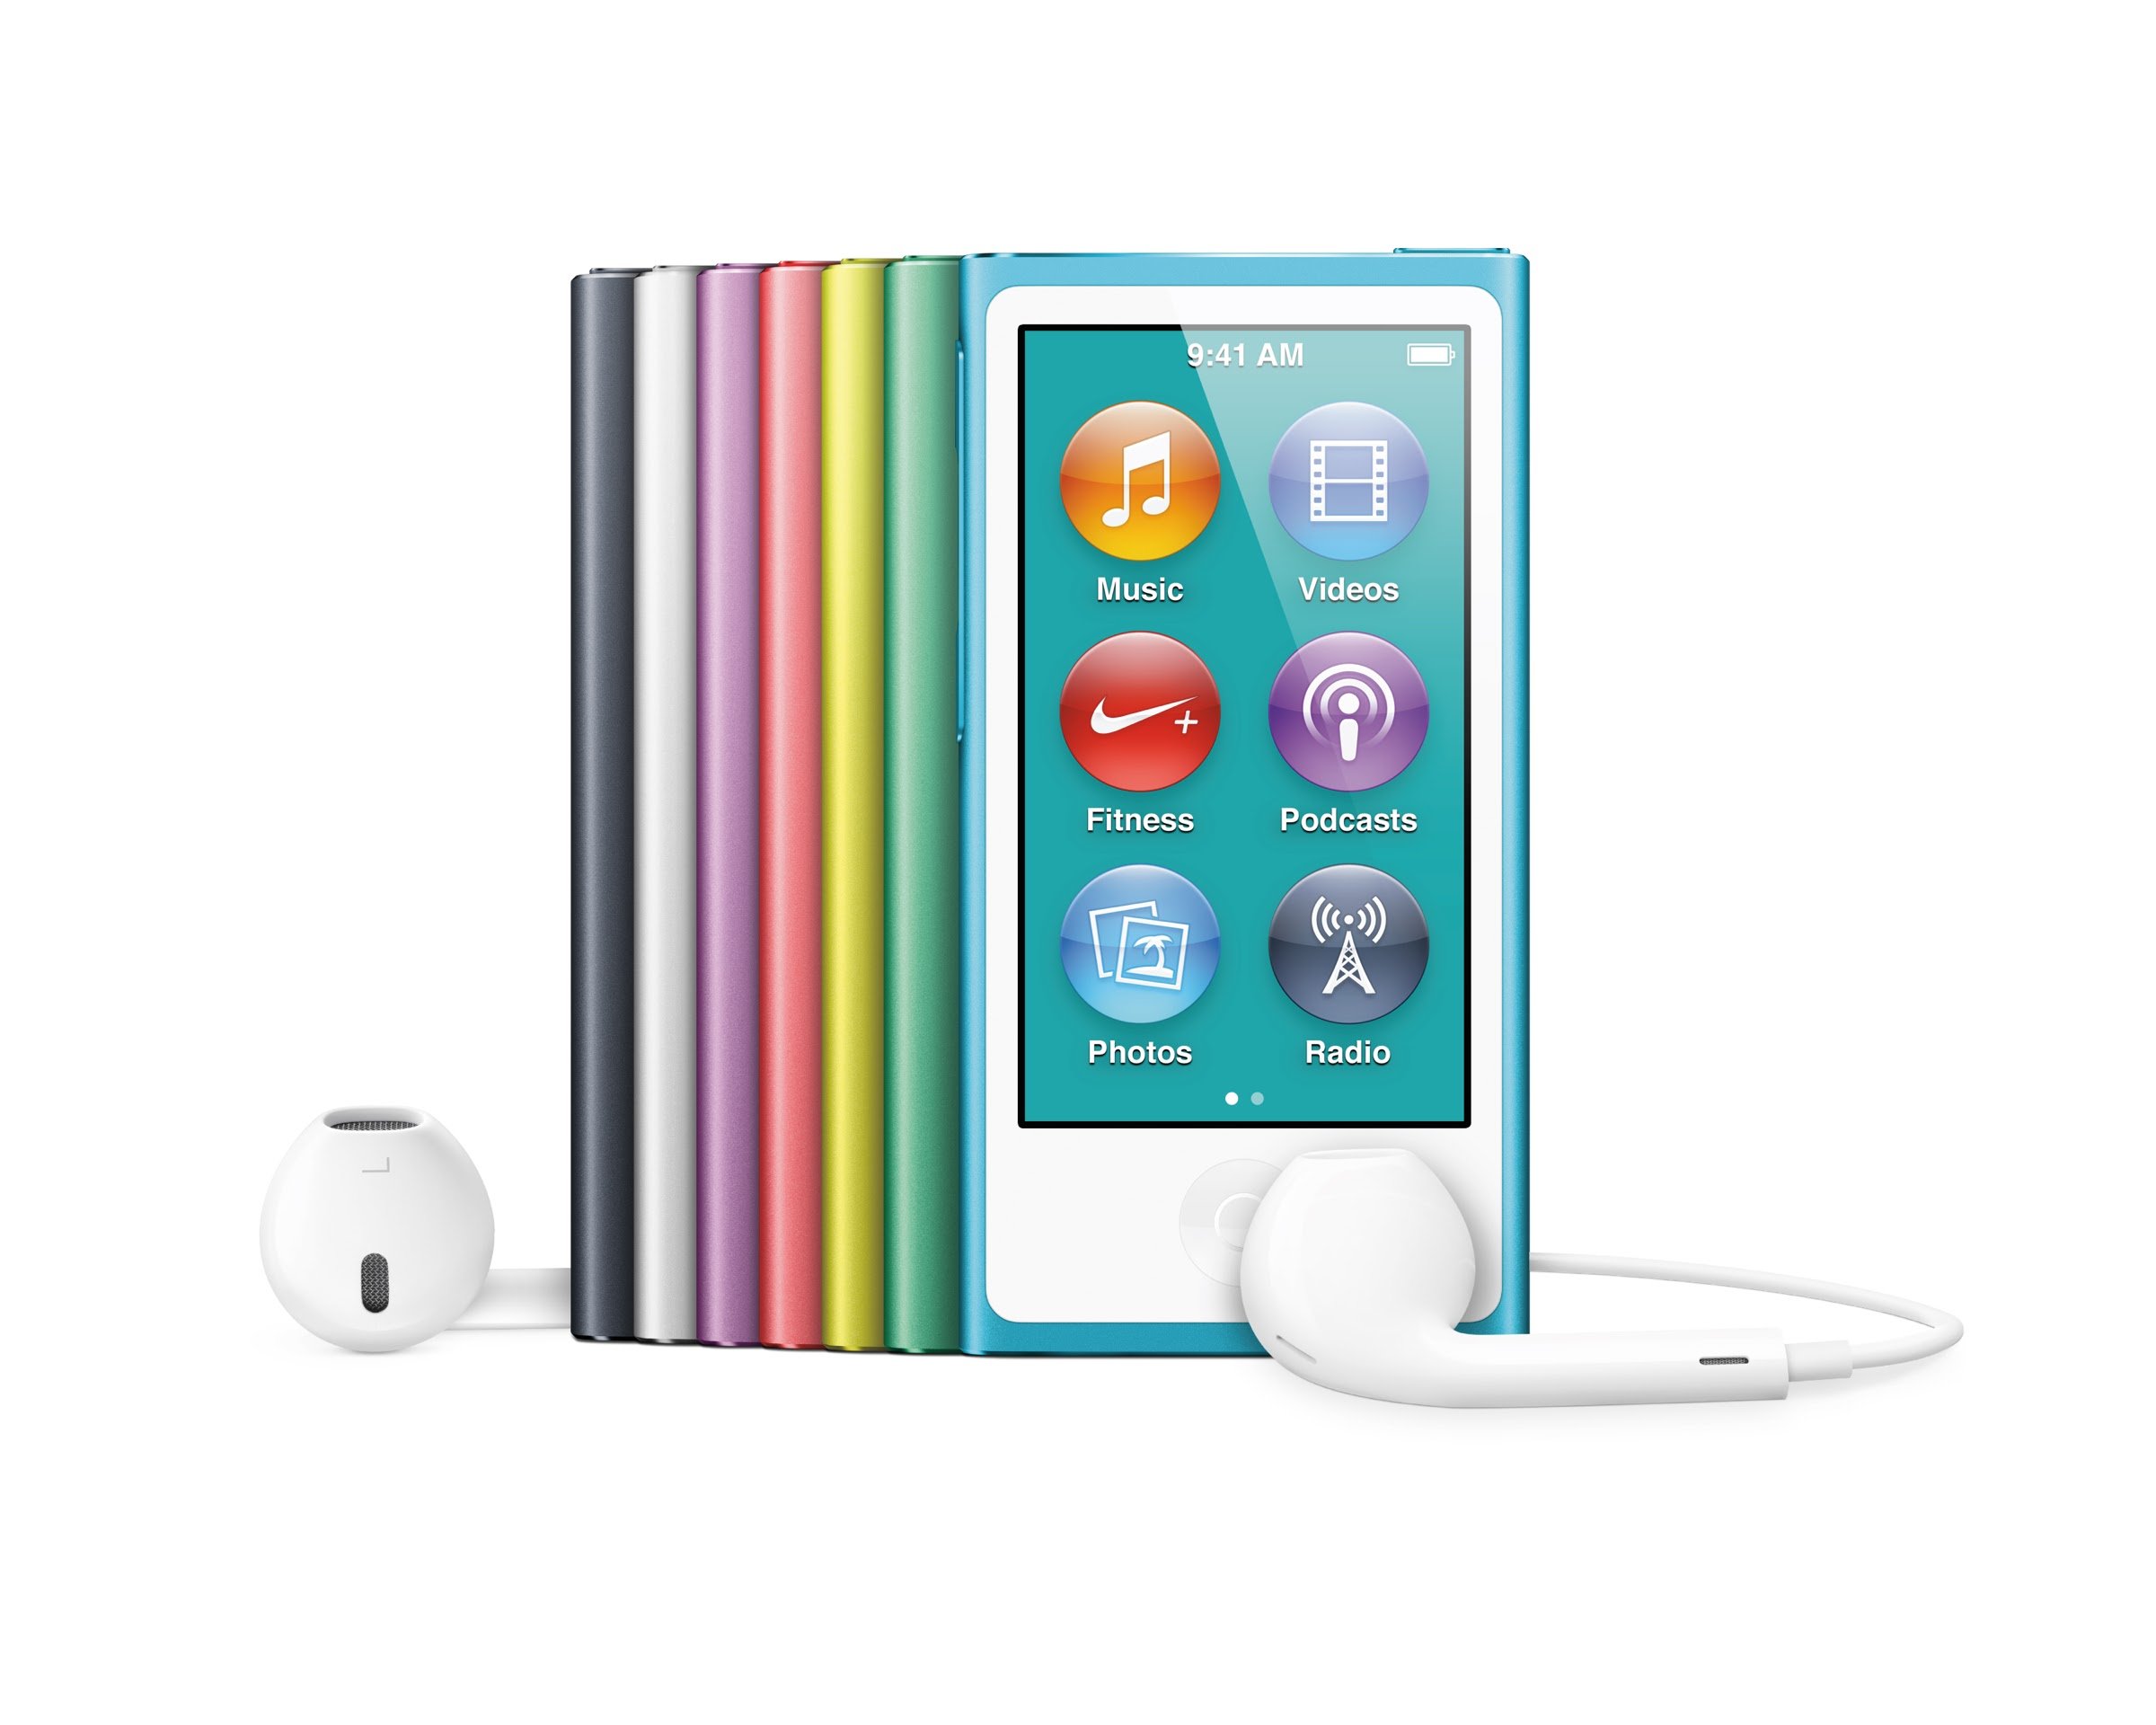 iPod nano รุ่นที่ 7 เข้าสู่สถานะ obsolete ทำให้ iPod nano ทุกรุ่นเข้า